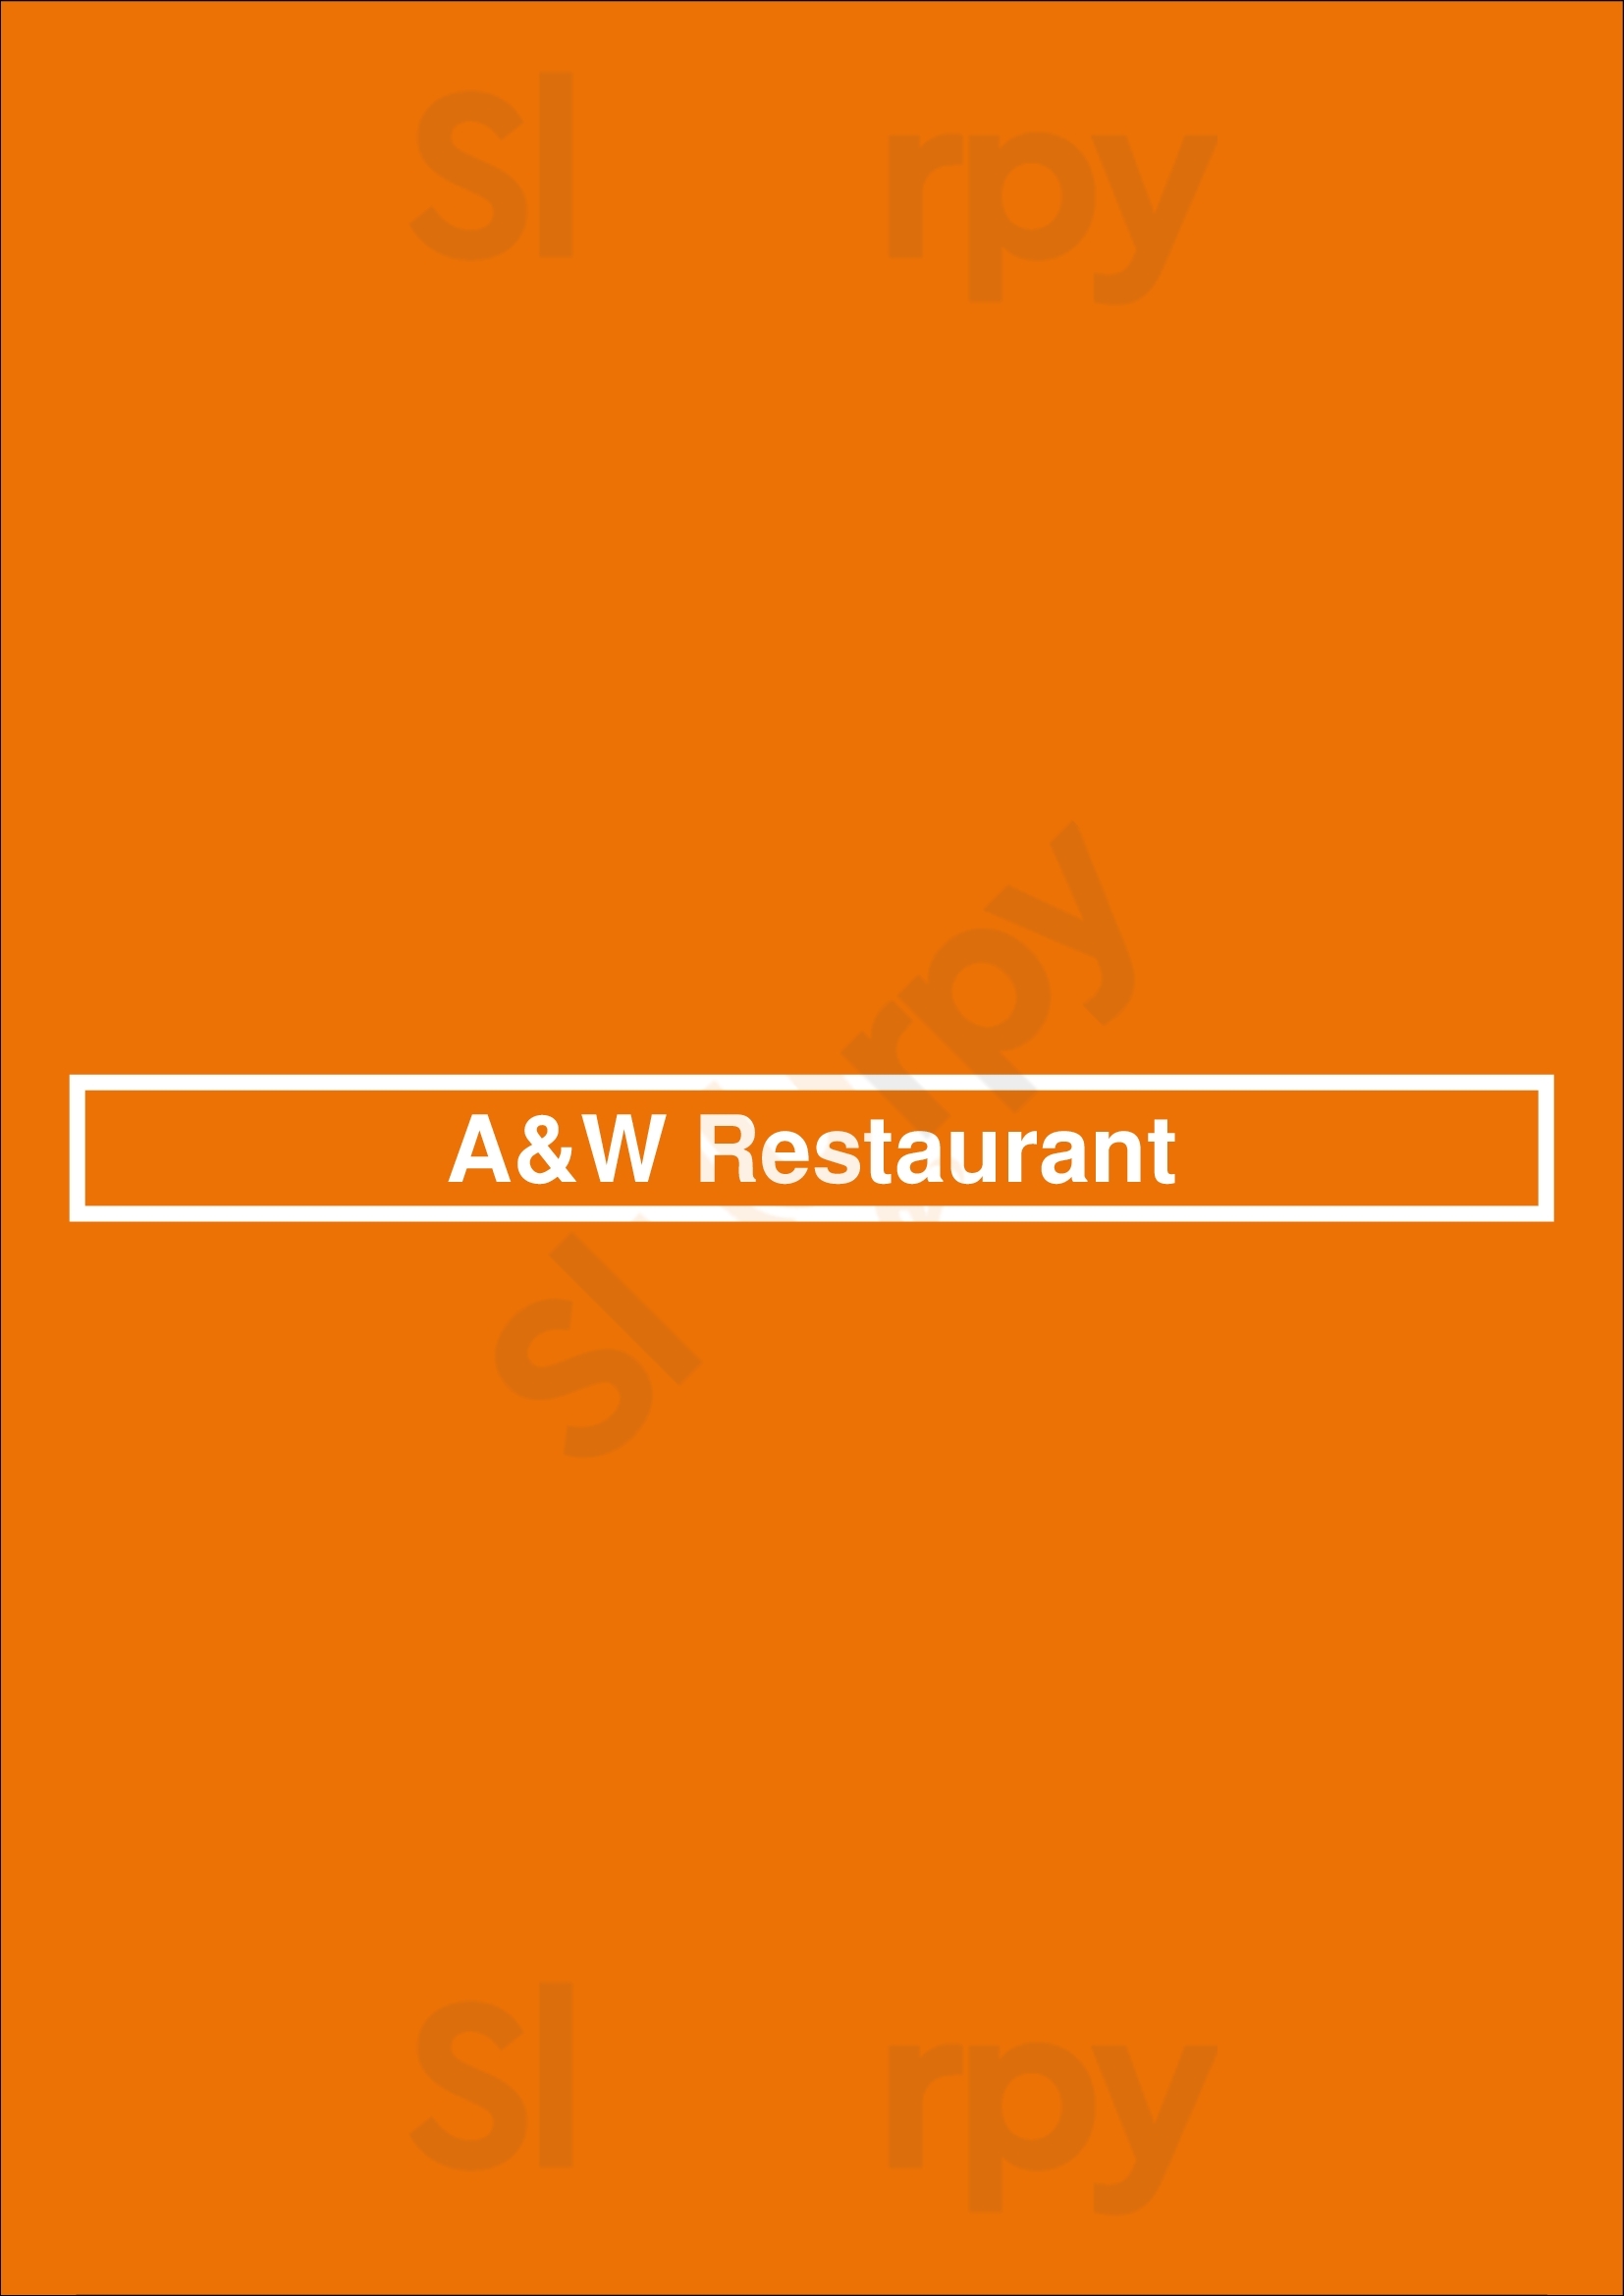 A&w Restaurant Hamilton Menu - 1